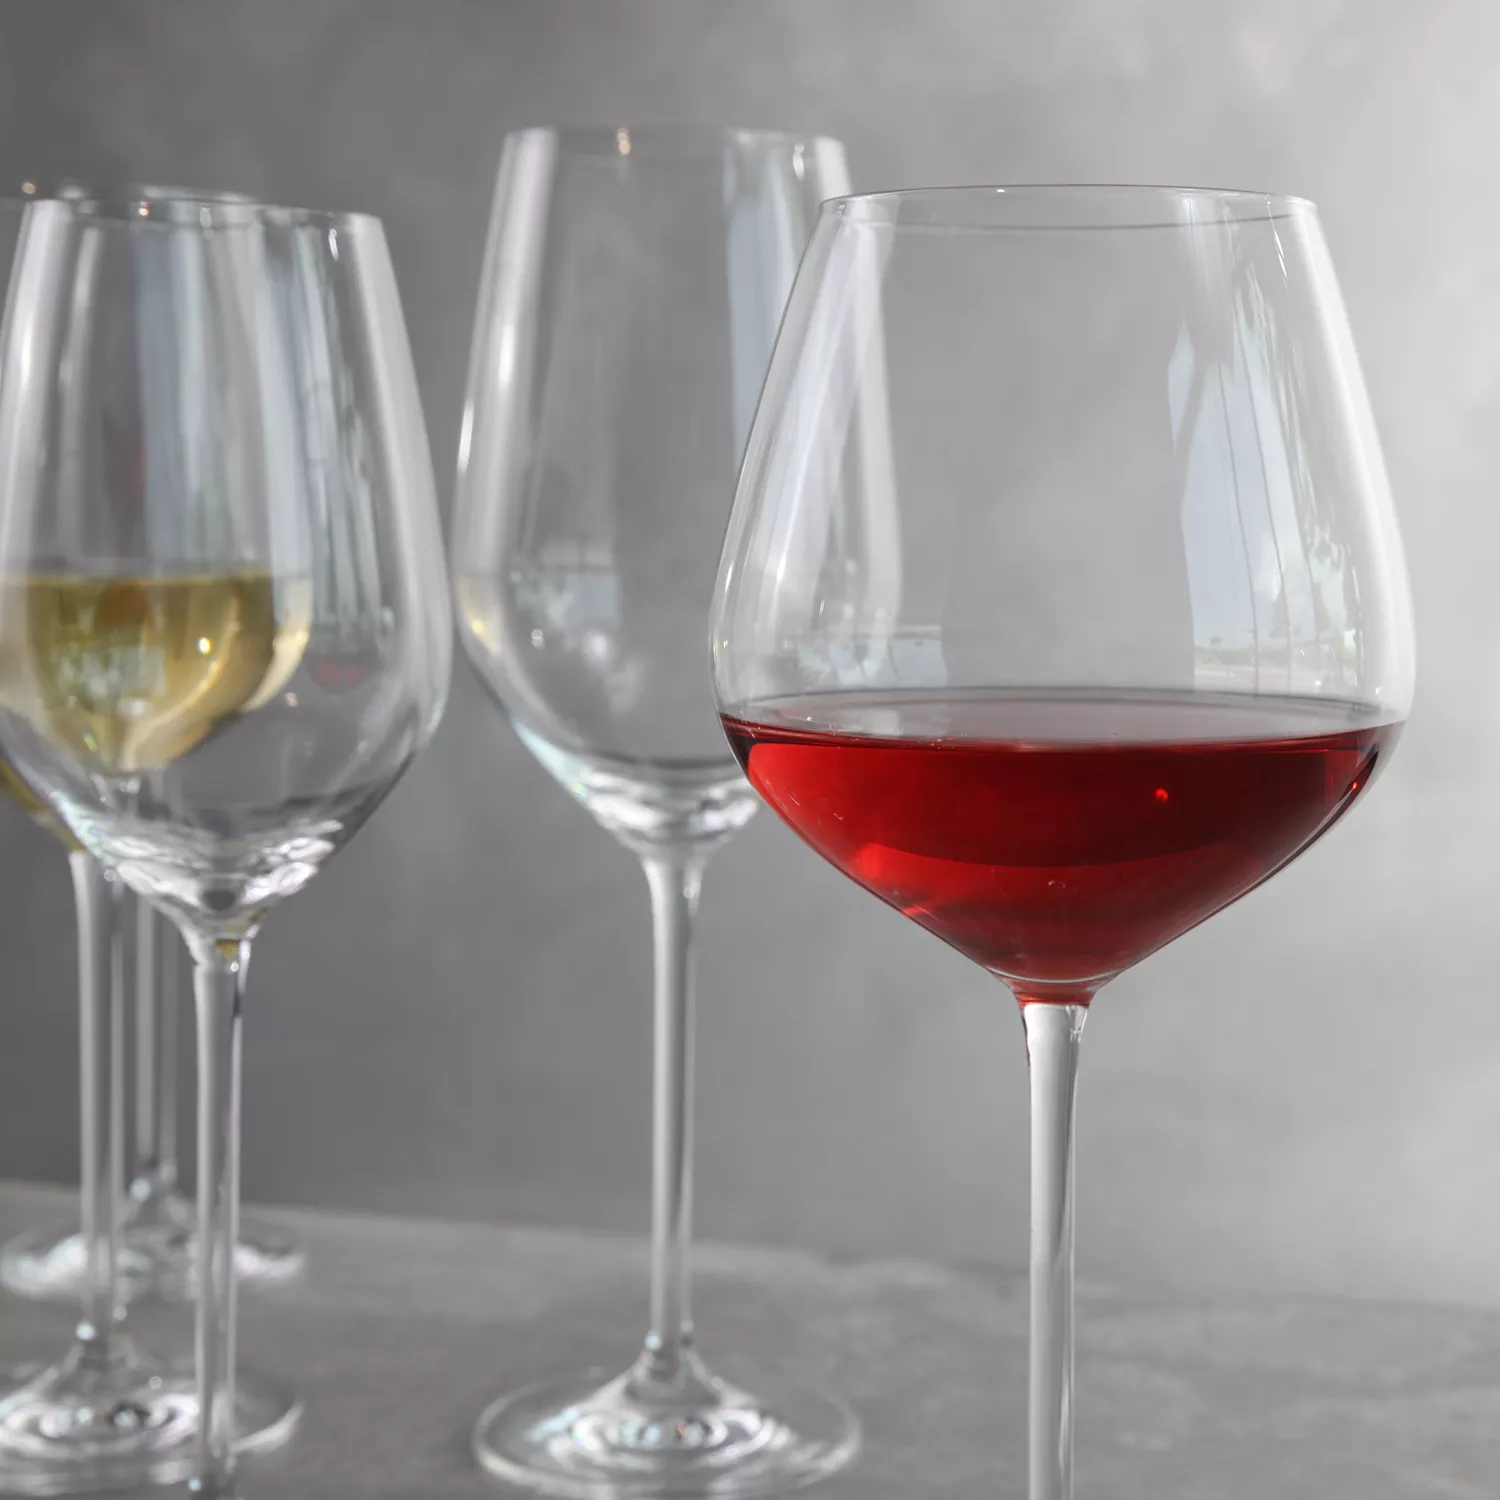 Schott Zwiesel Fortissimo Soft-White Wine Glasses